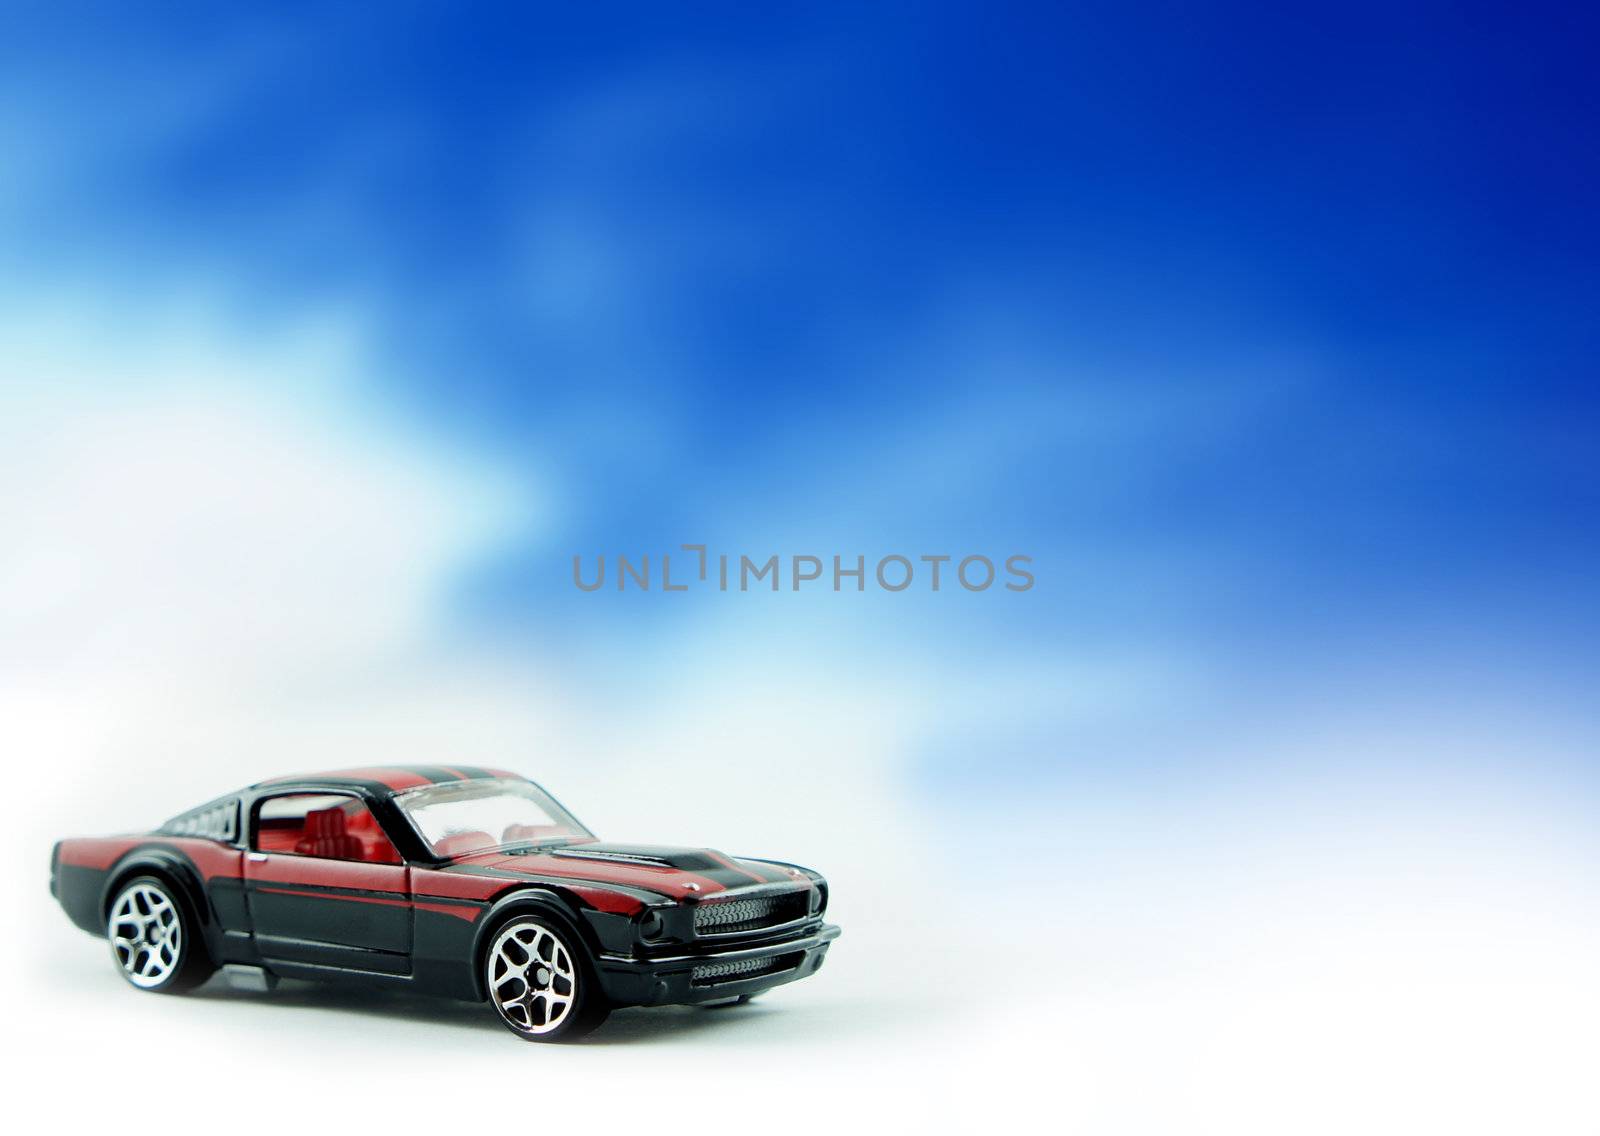 Ford Mustang Toy Car by kbuntu